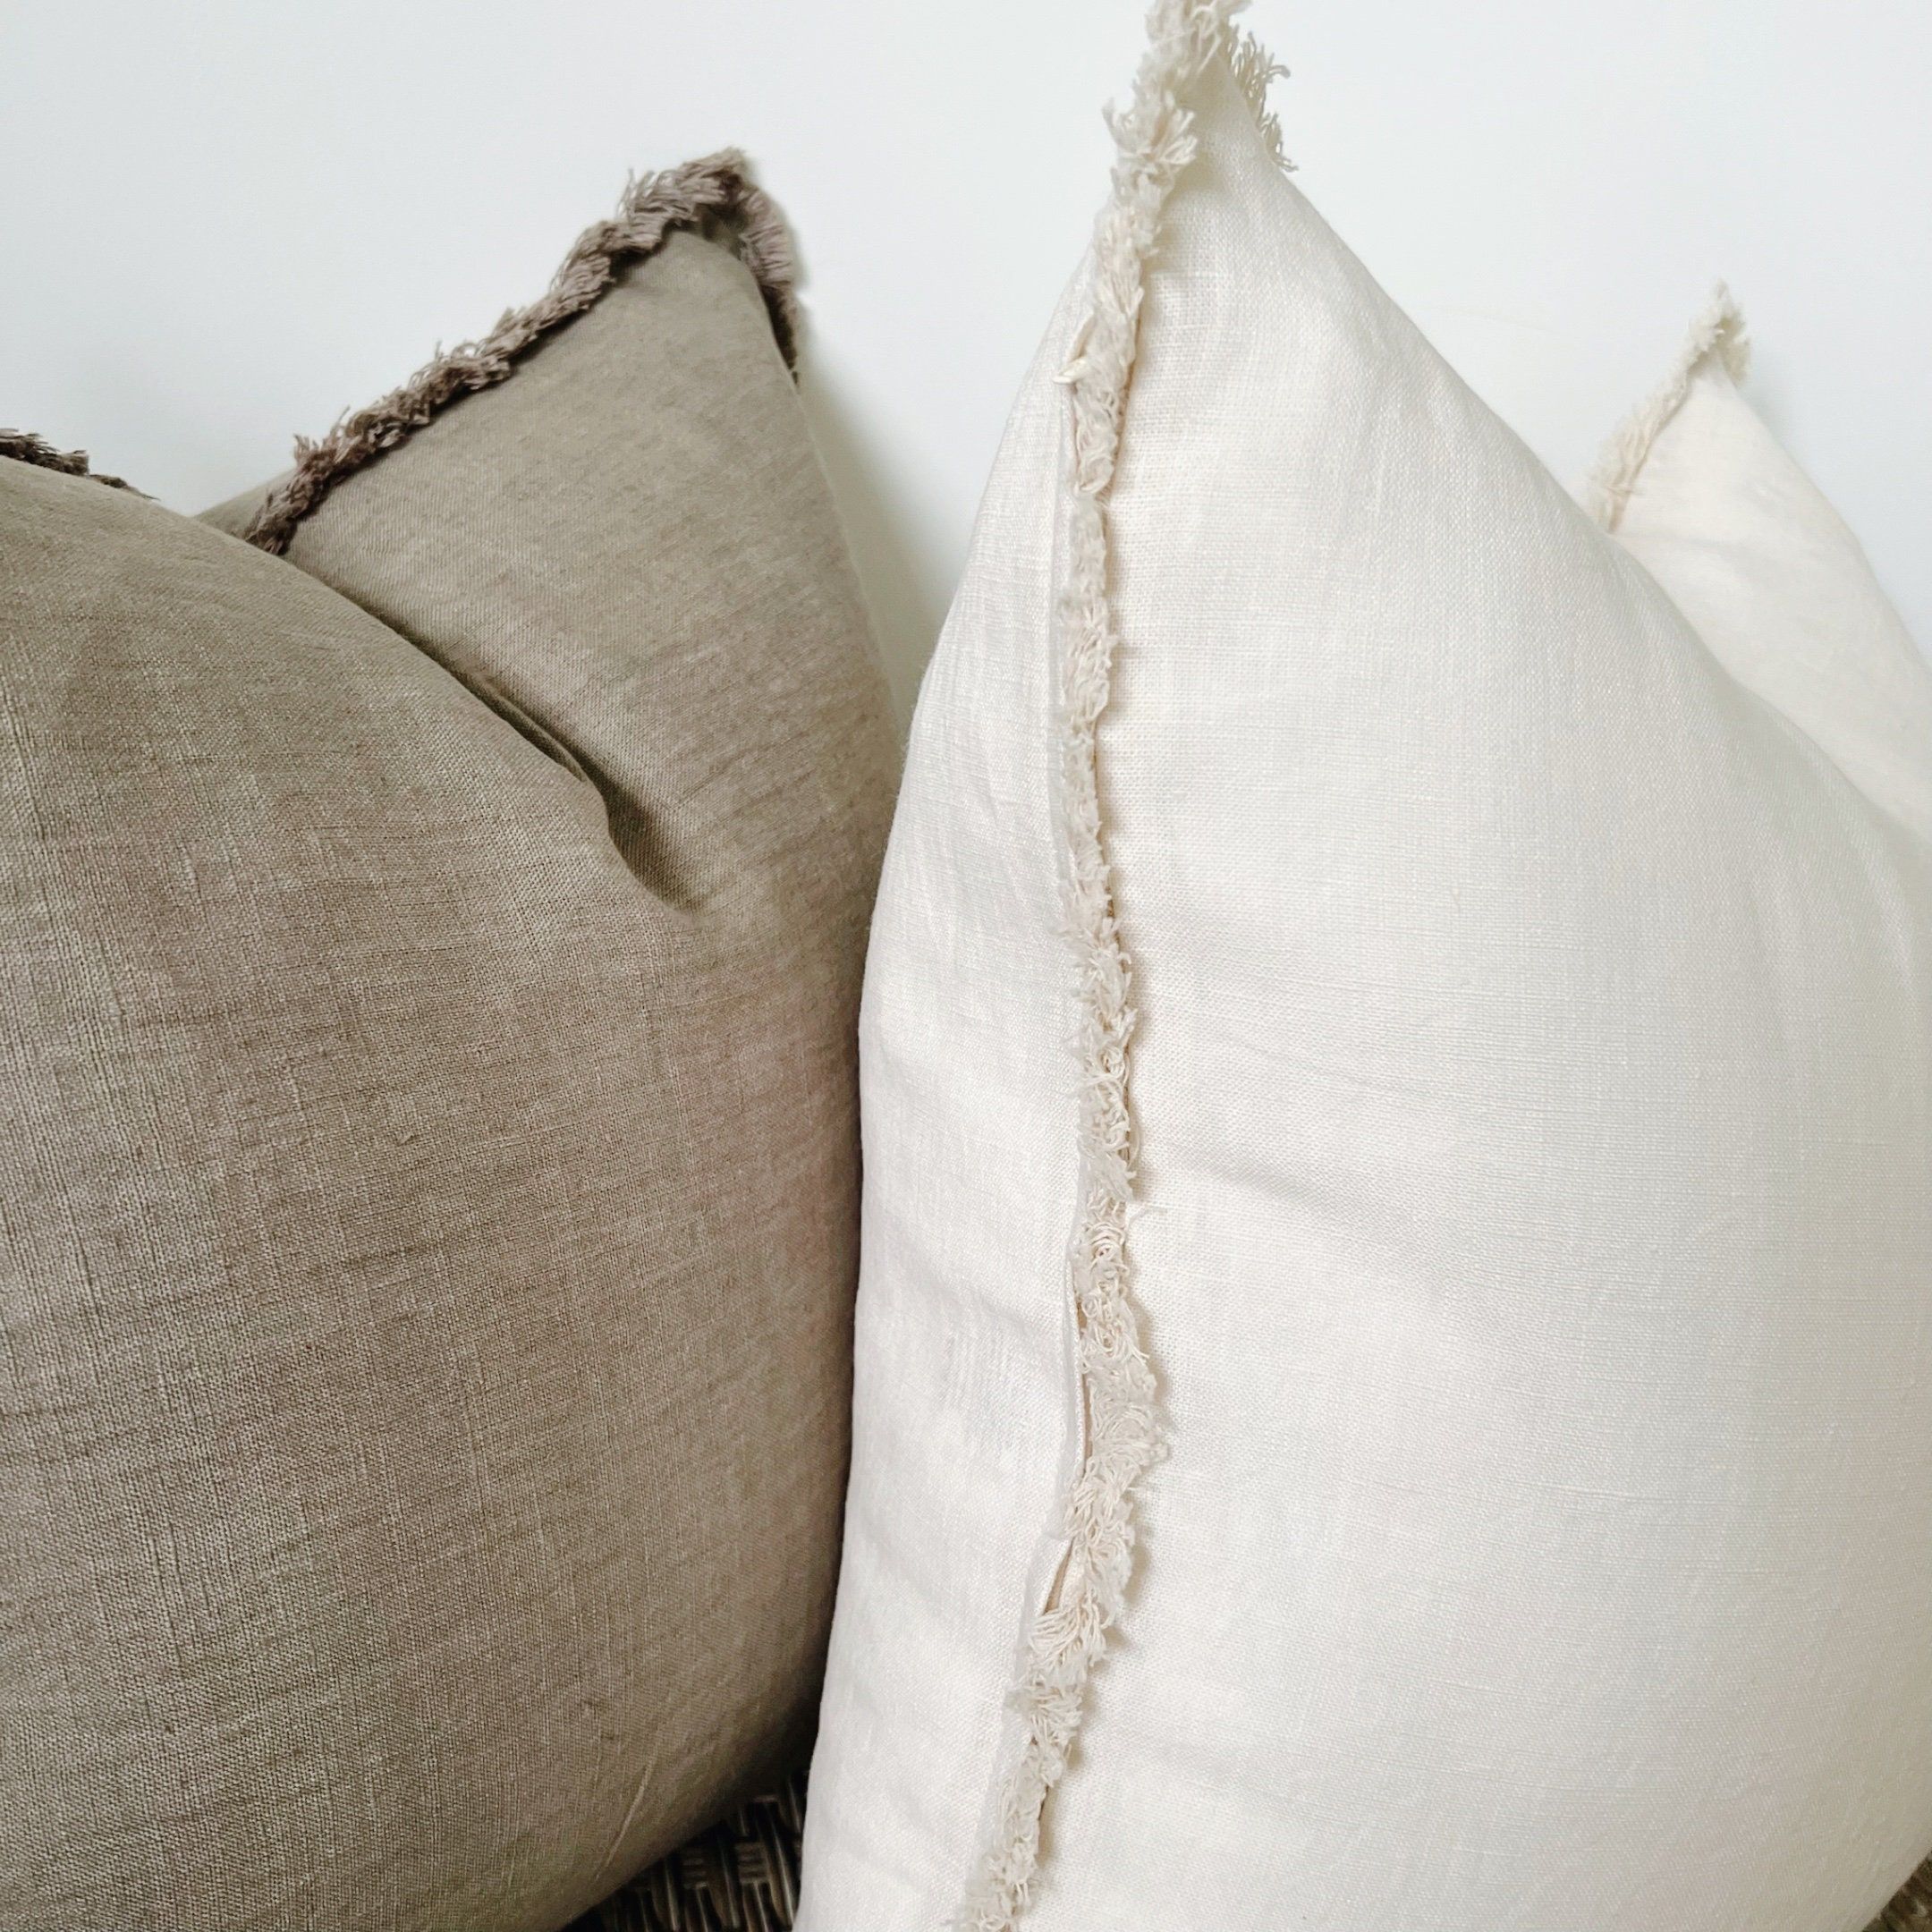 European Decorative Pillow Elegant Pillows That Bring European Flair to Your Home